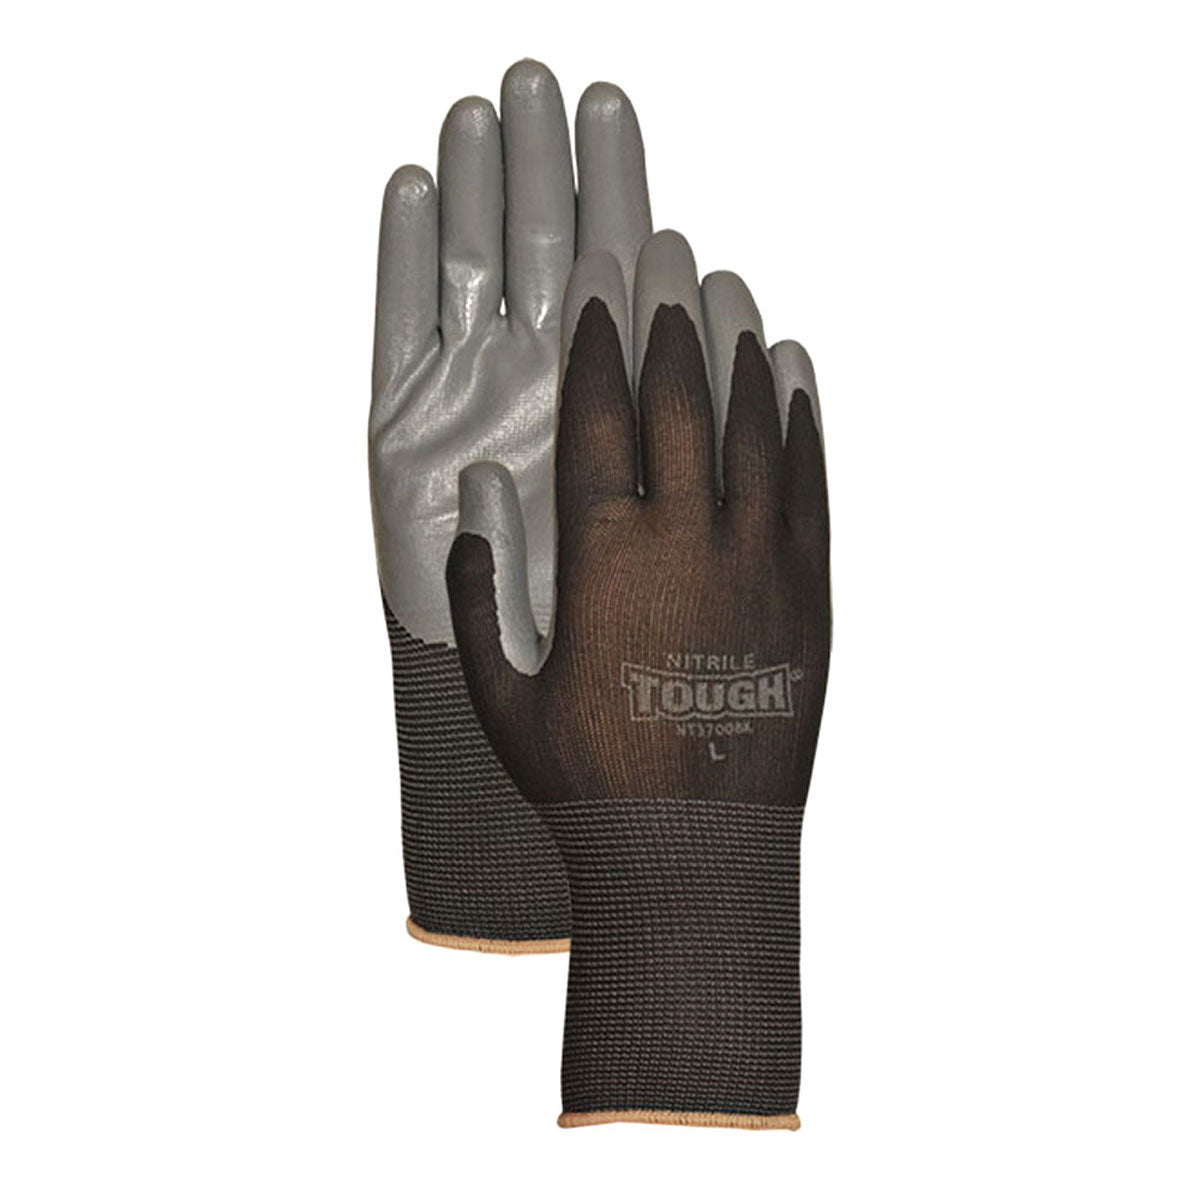 Bellingham Nitrile Tough Glove - Black